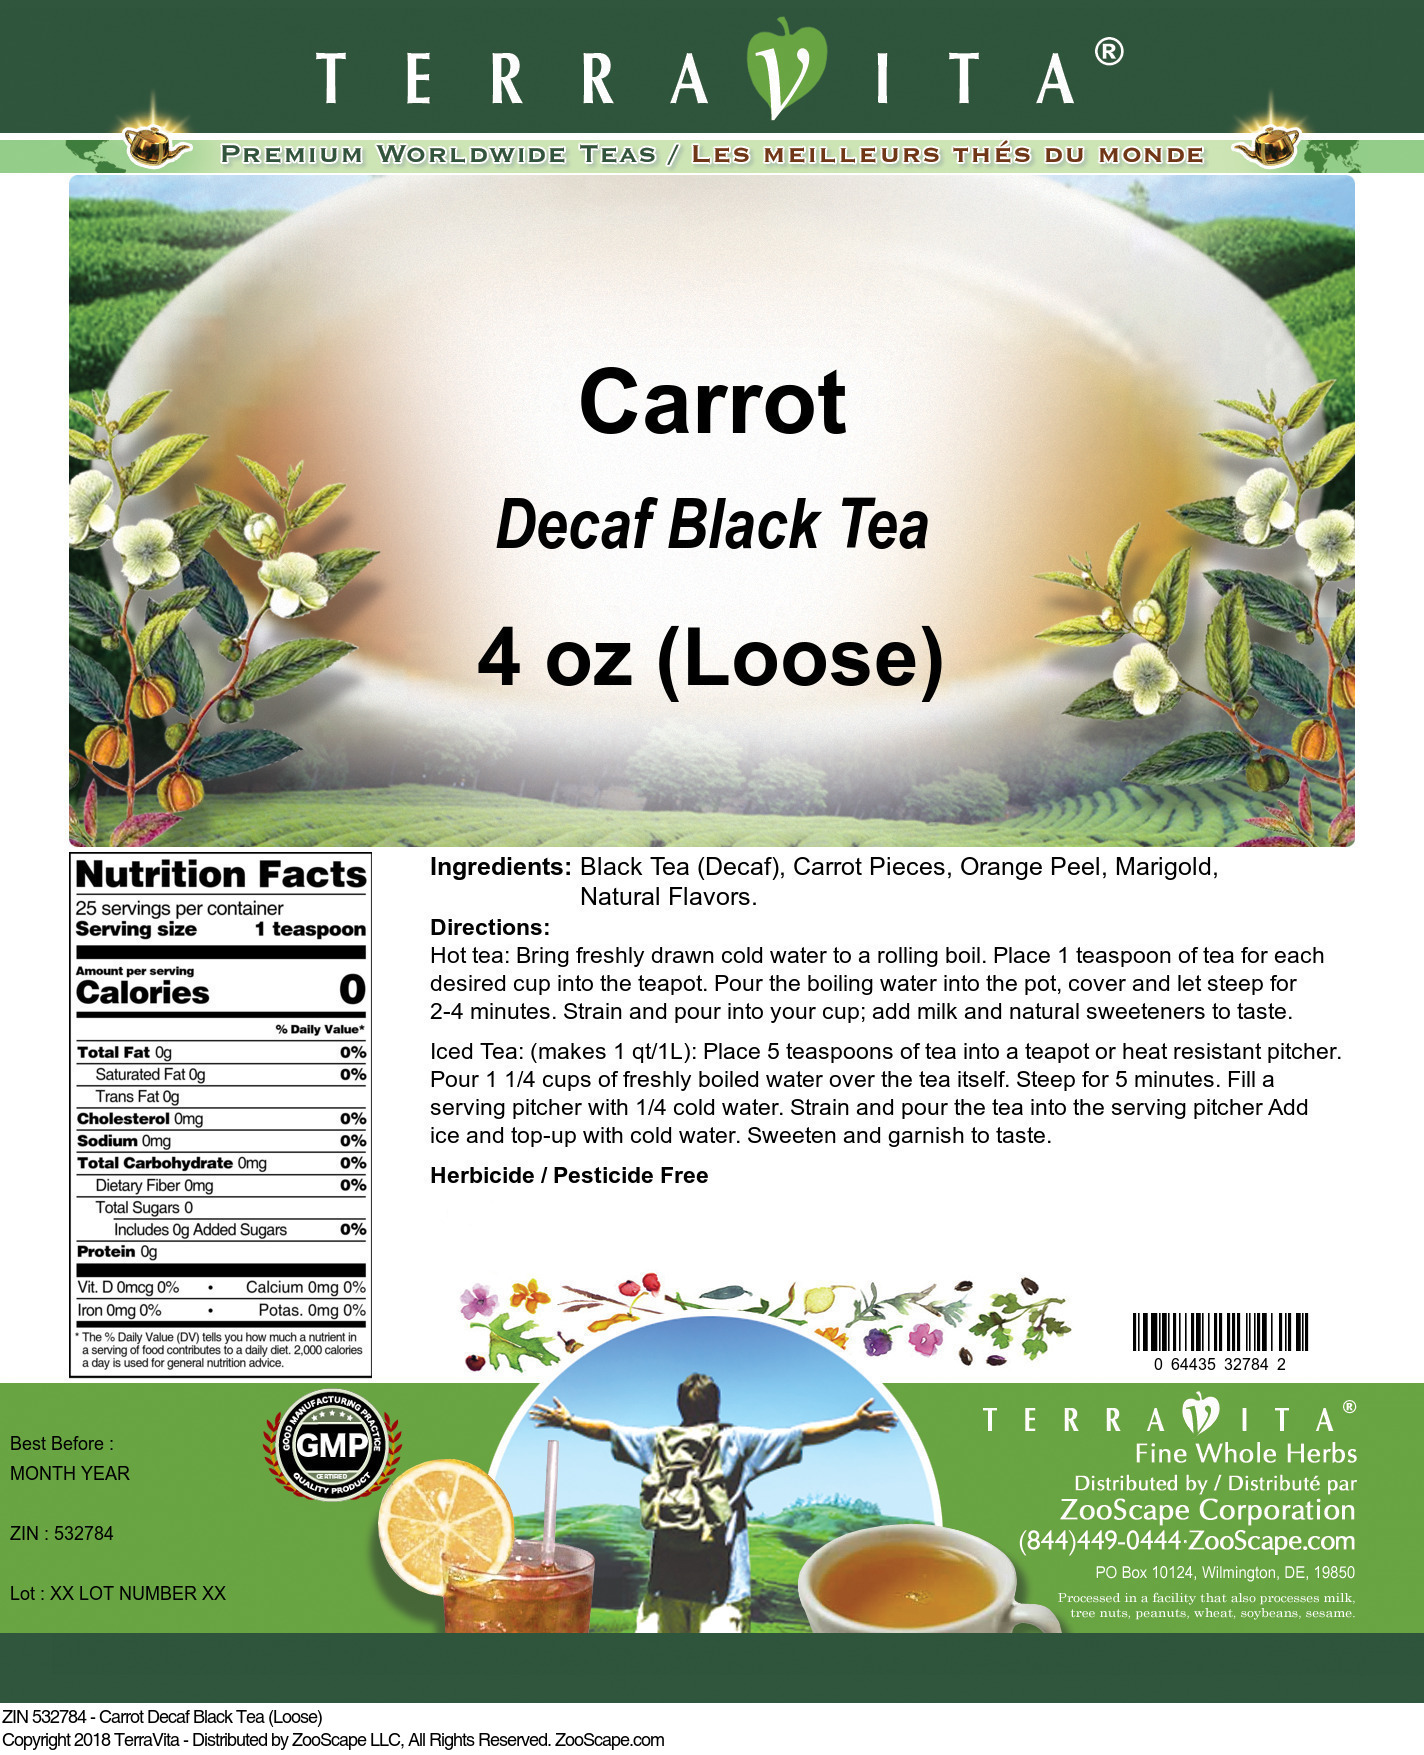 Carrot Decaf Black Tea (Loose) - Label